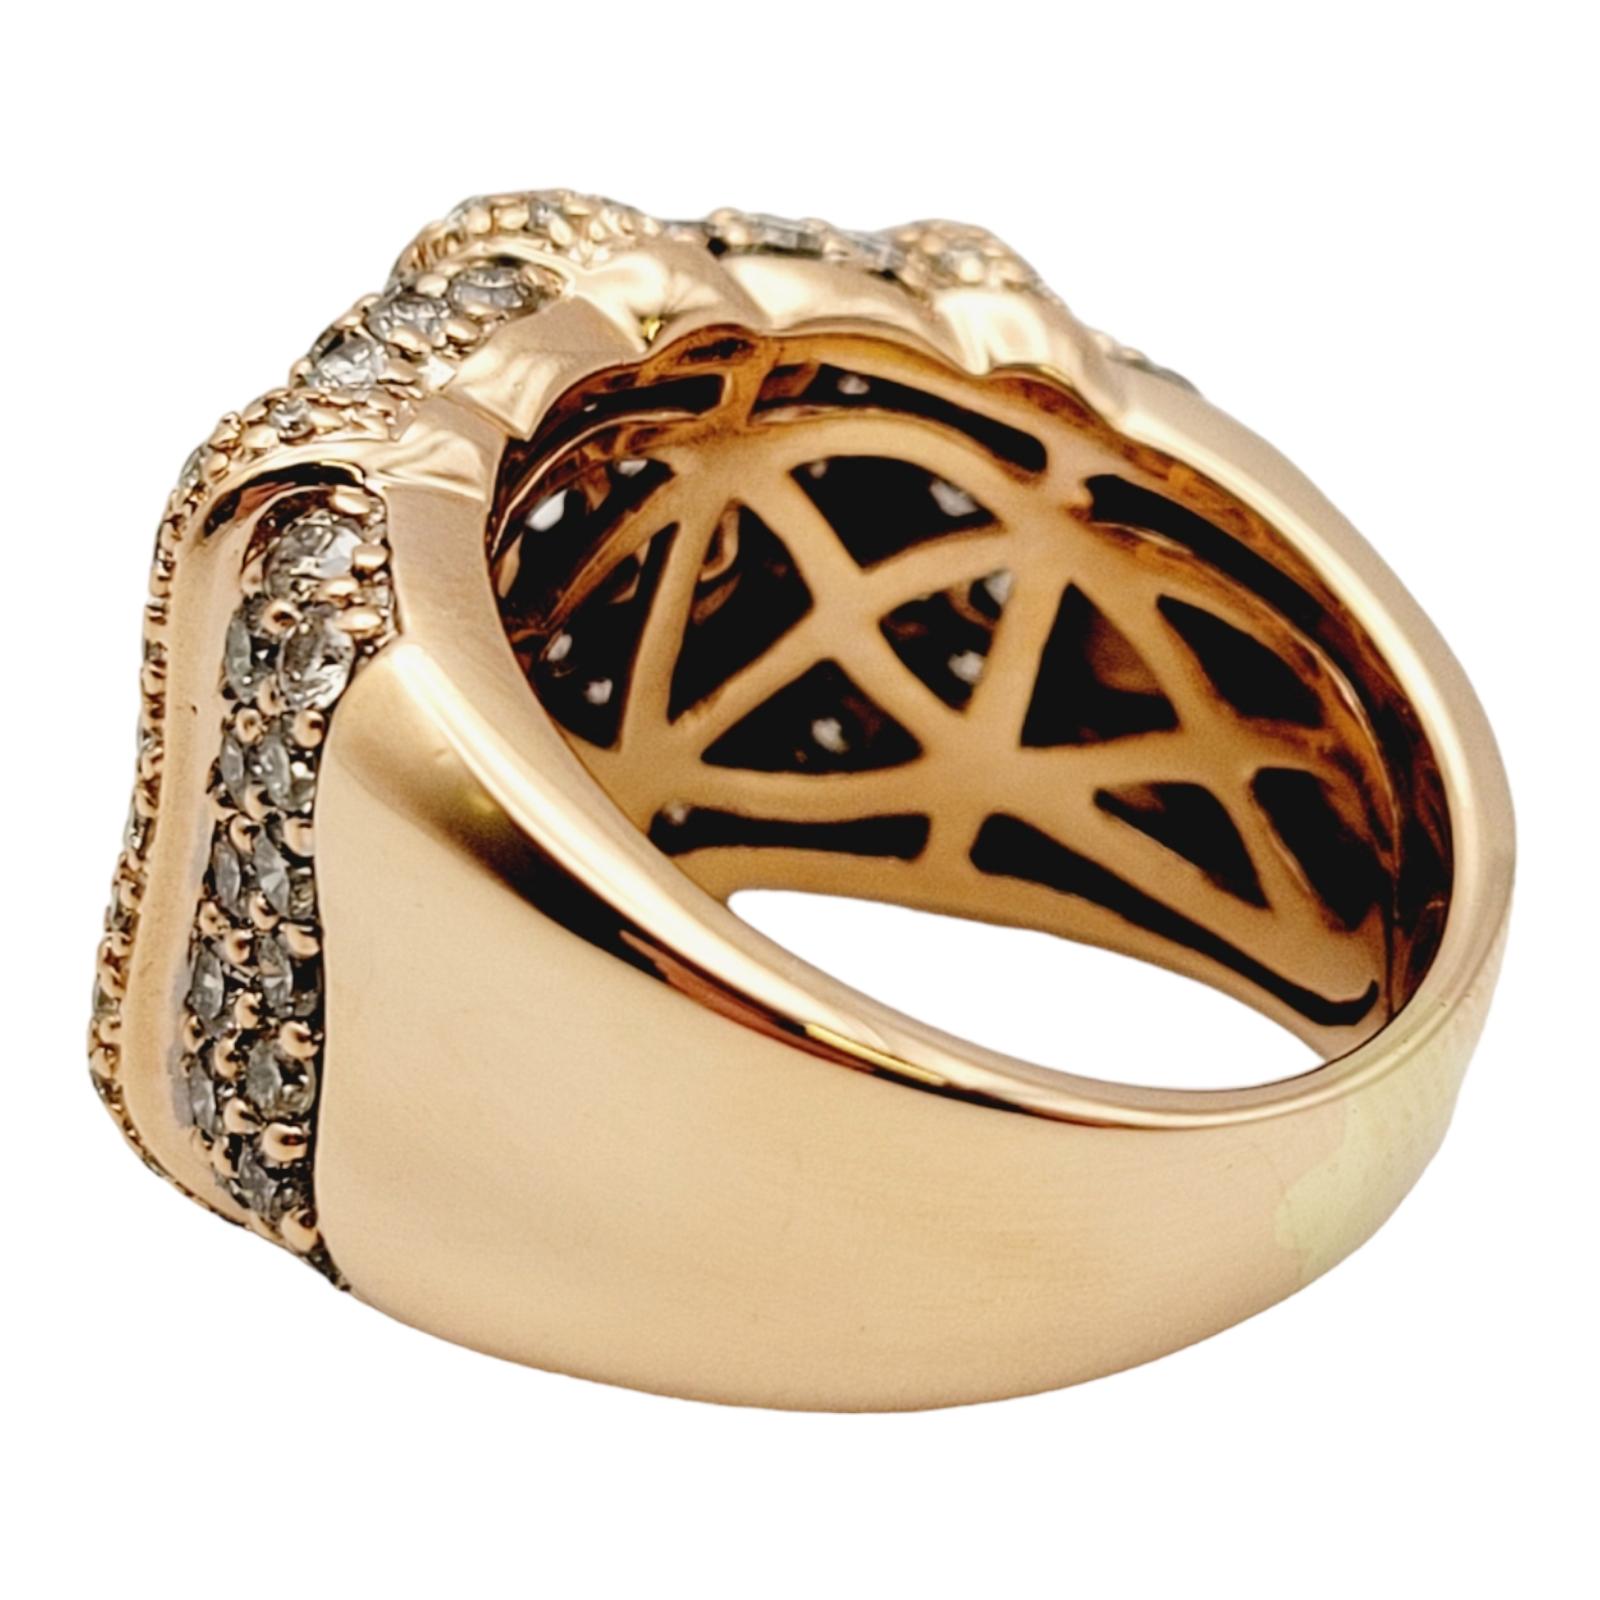 2.14 Carat Light Brown Diamond Pave Band Ring in Polished 14 Karat Rose Gold For Sale 1